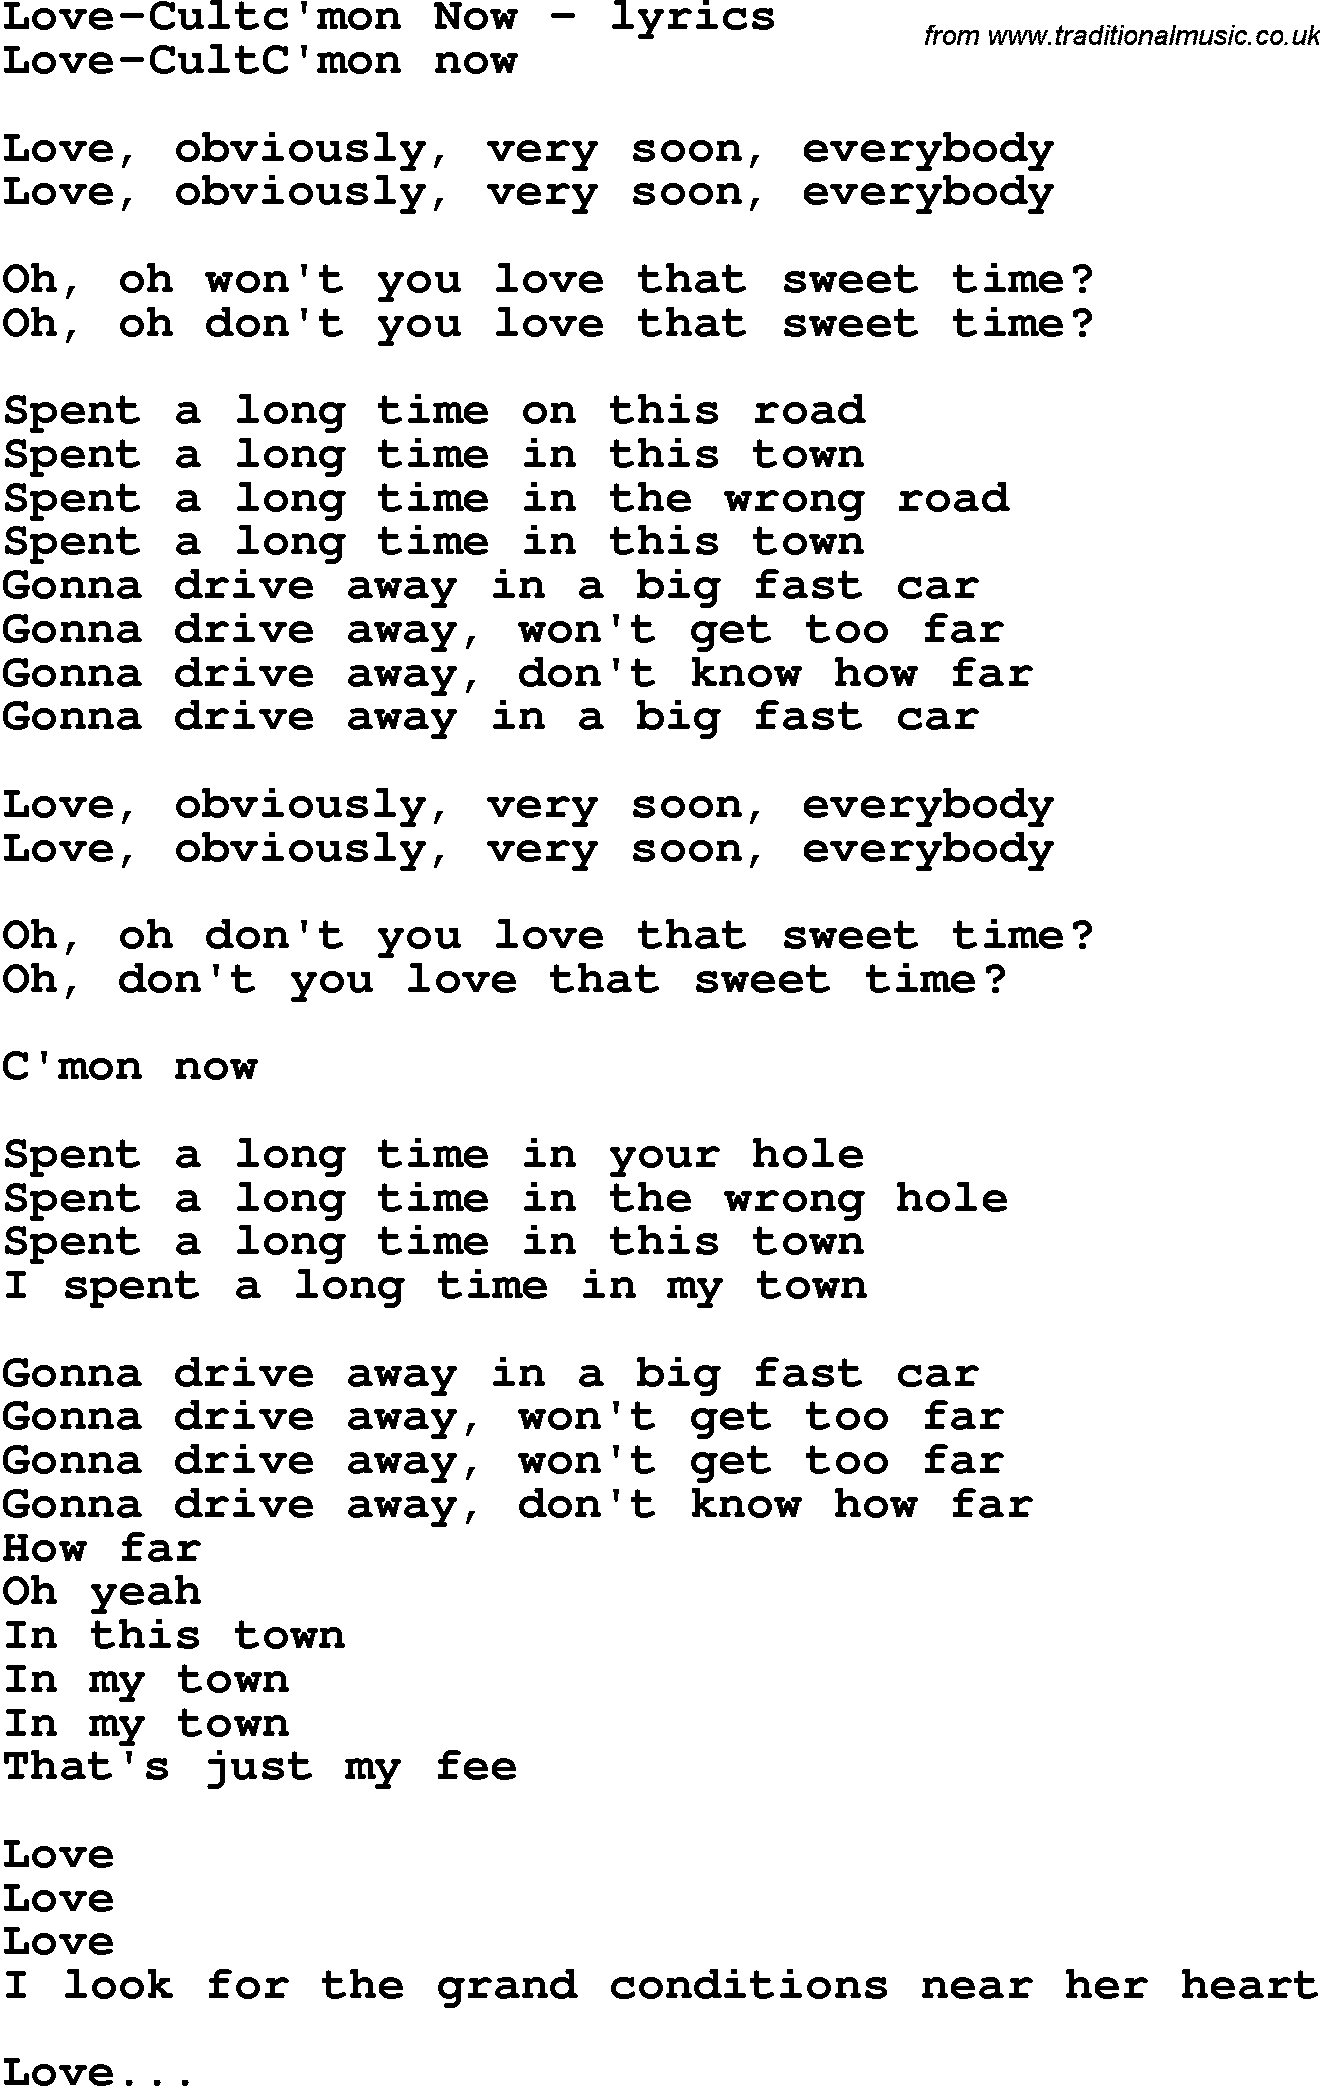 Love Song Lyrics for: Love-Cultc'mon Now